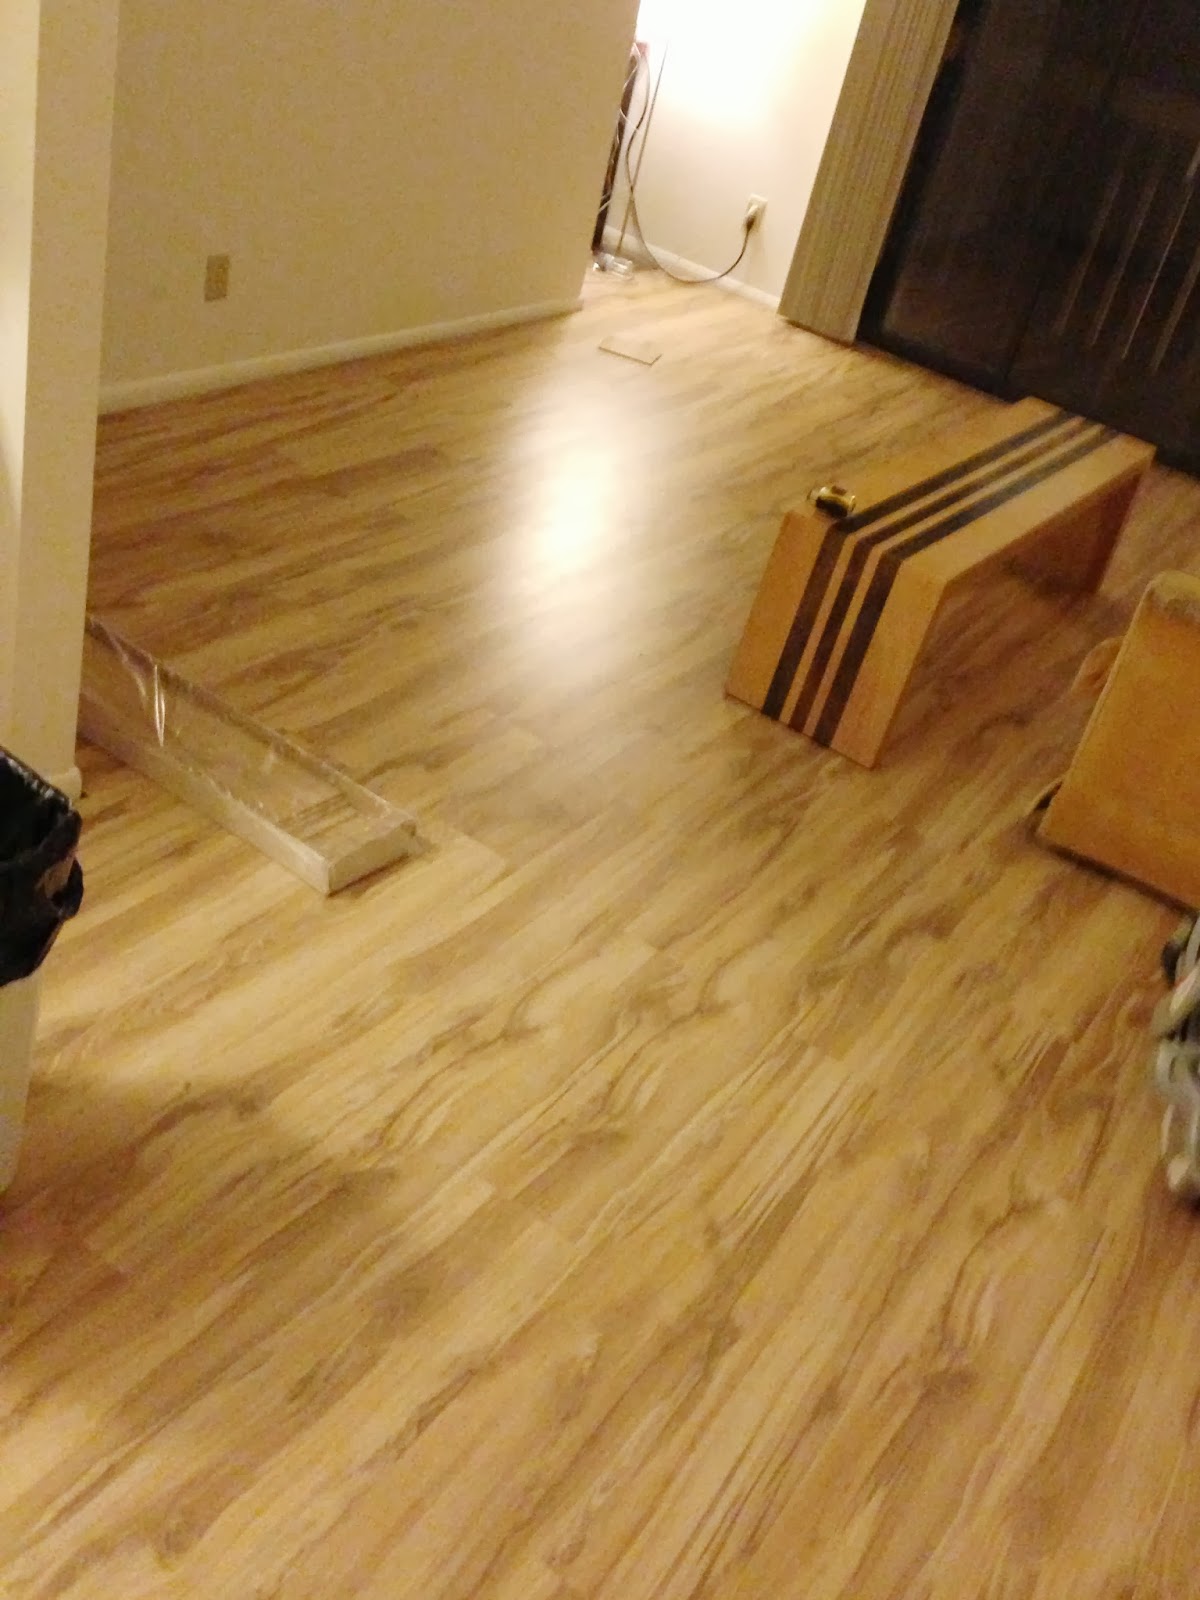 How We Put Hardwood Over Carpet Messymom, Wood Floor Tiles Over Carpet